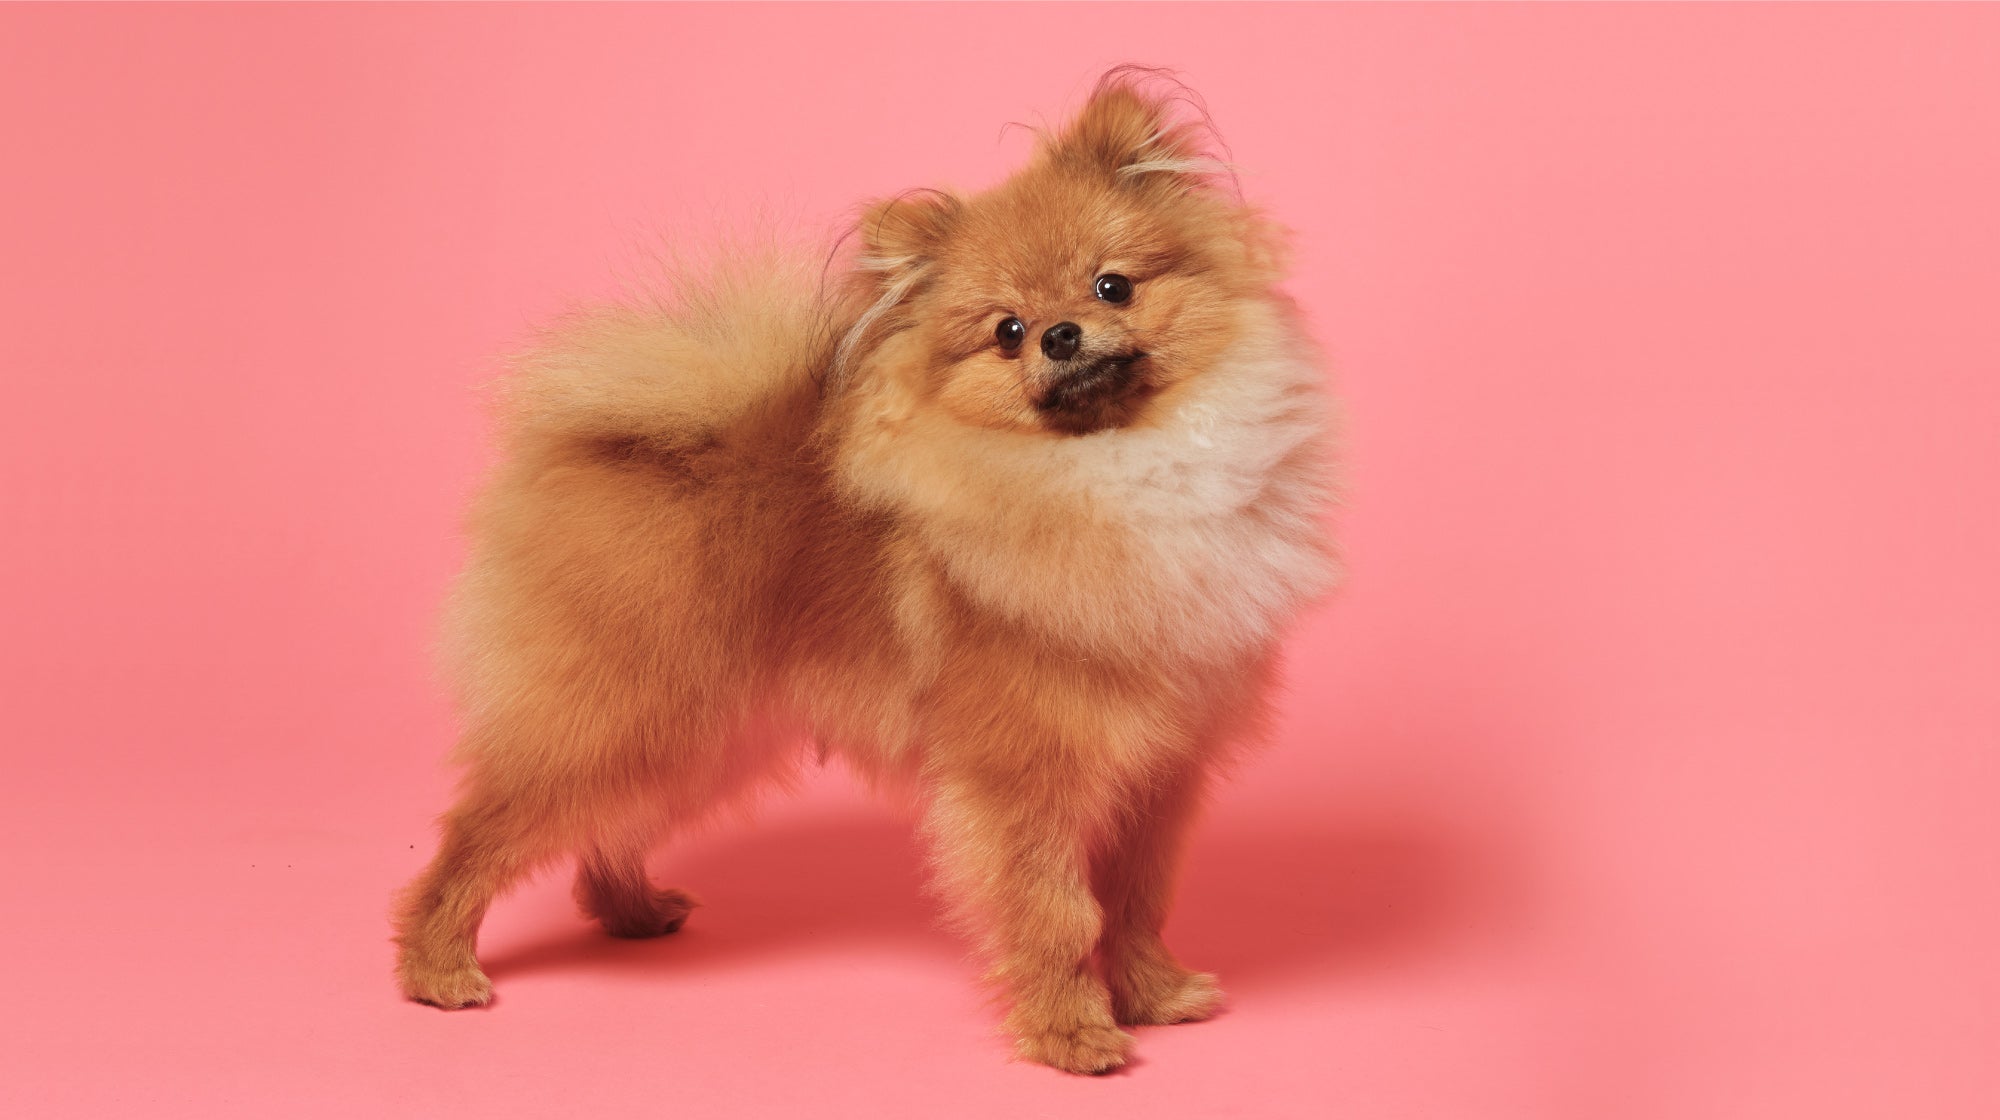 Fluffy dog on a pink background